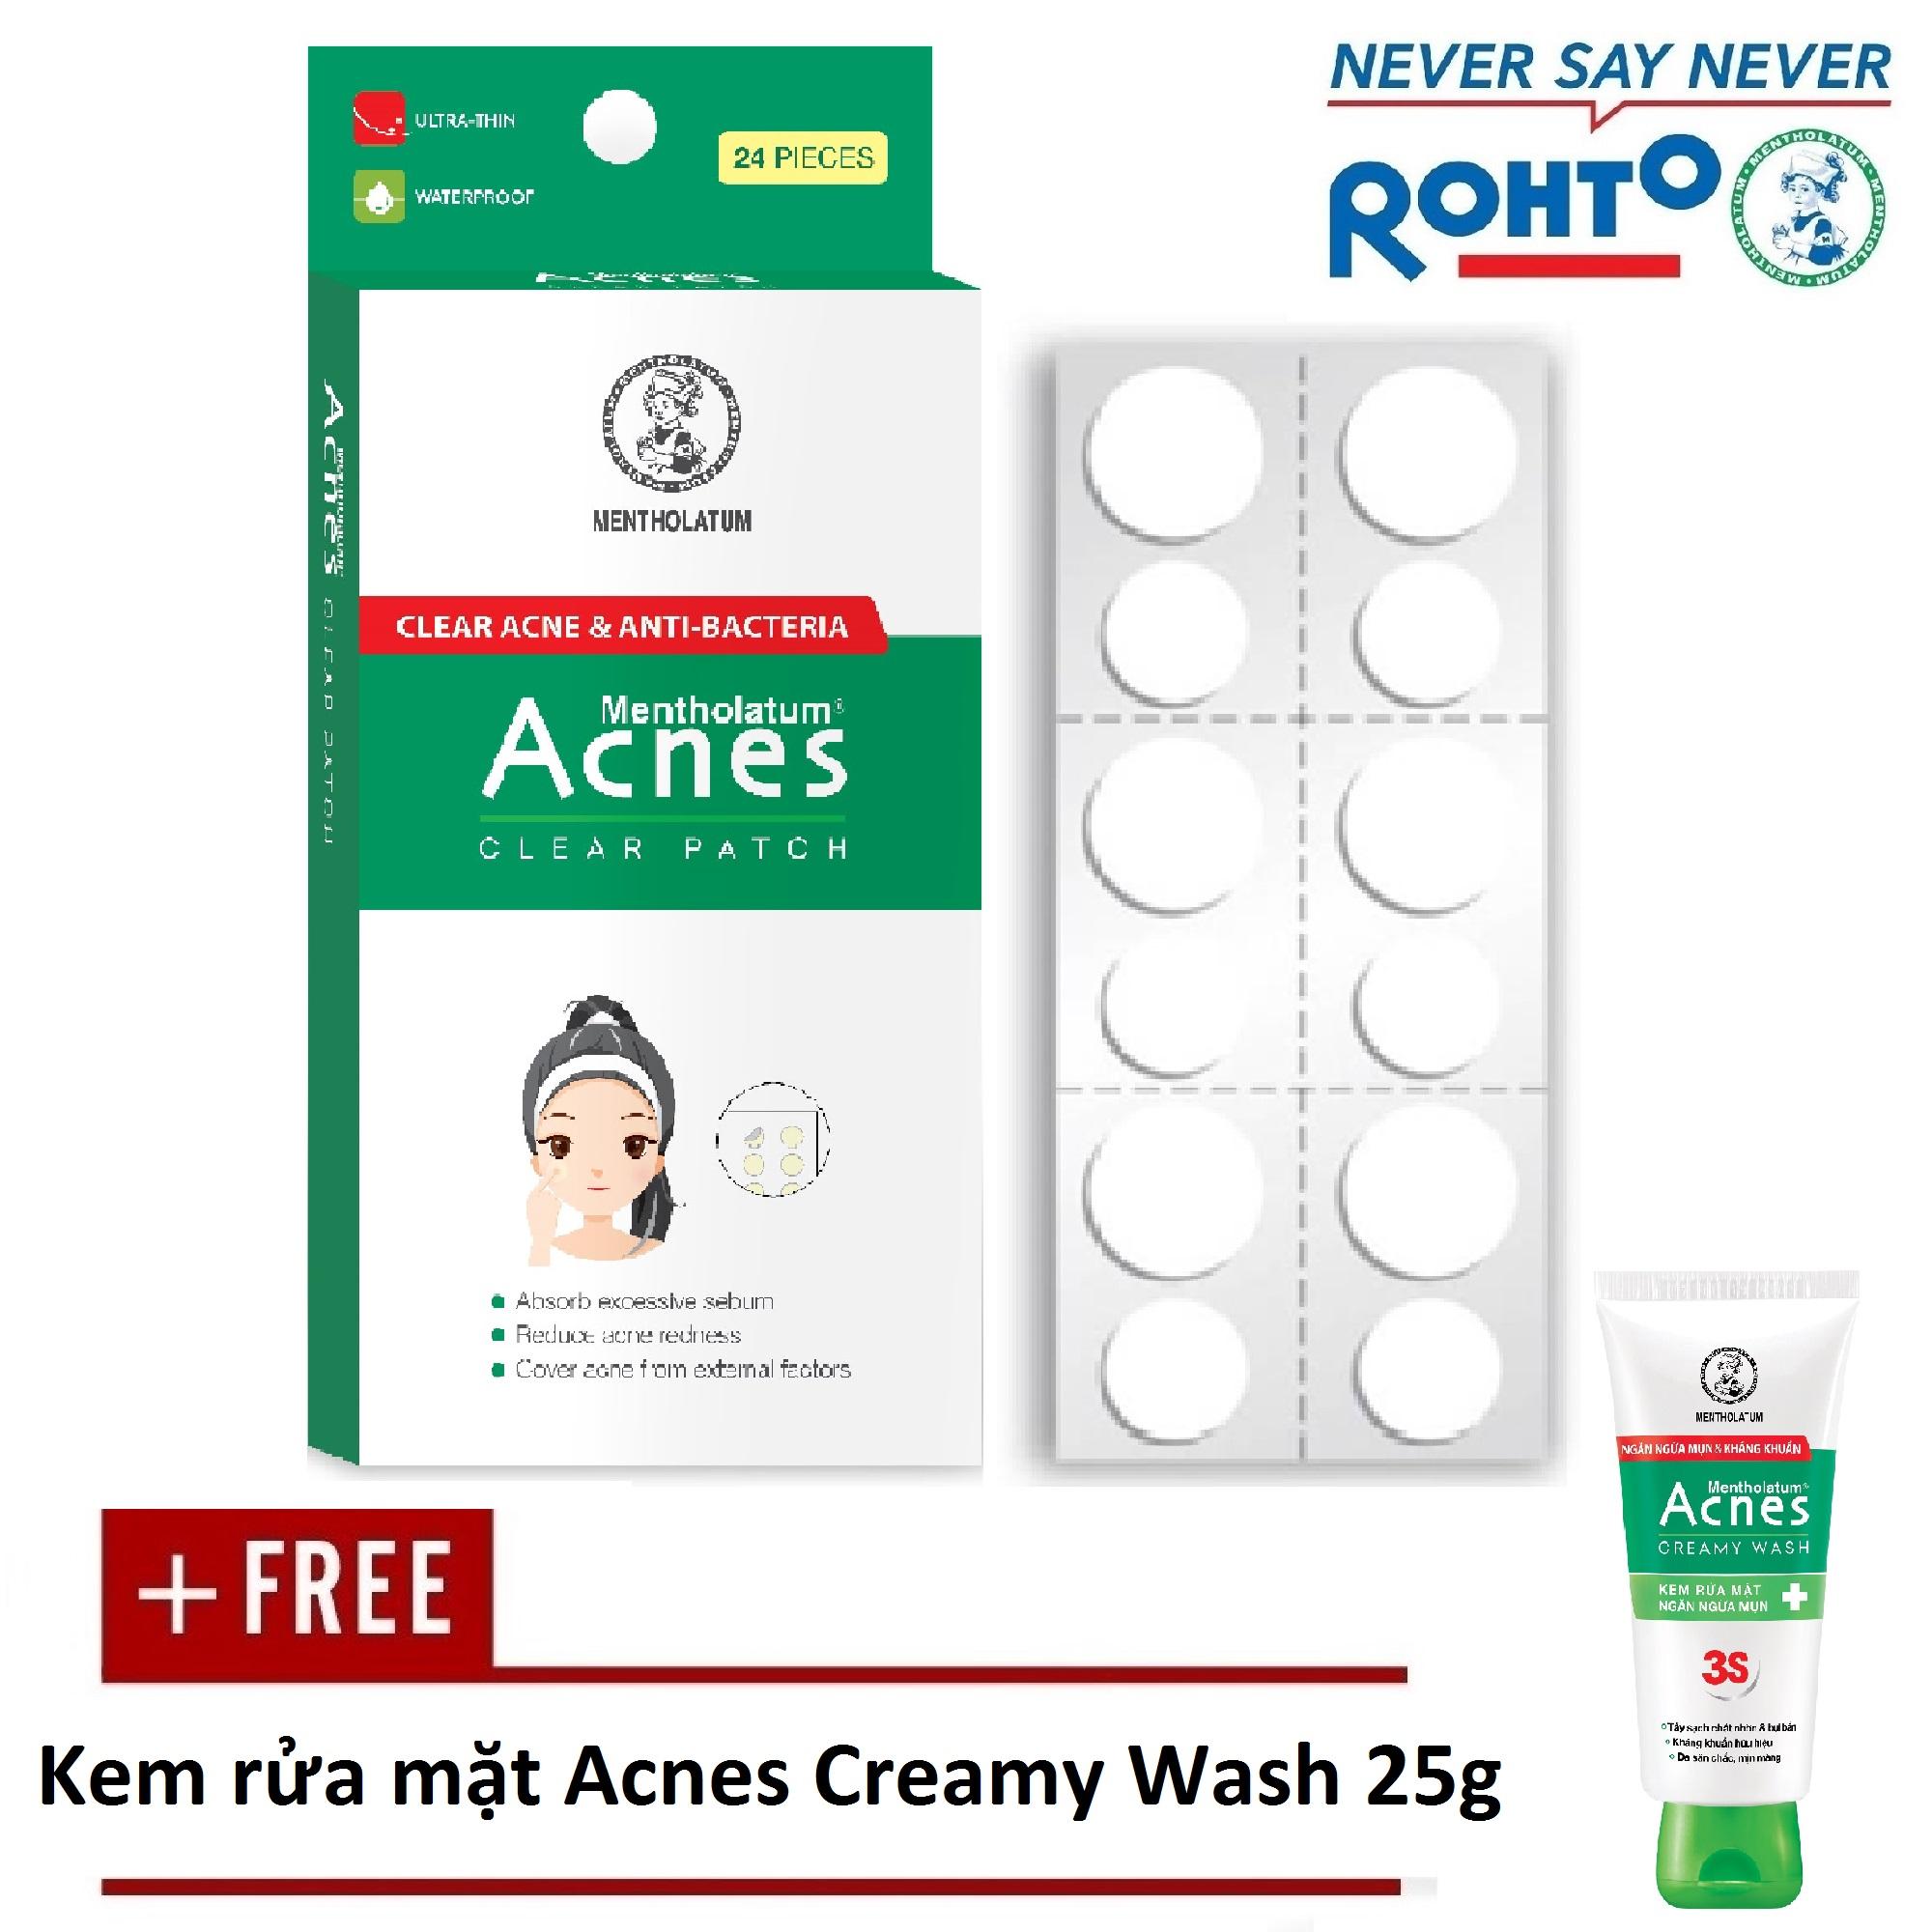 Miếng dán mụn Acnes Clear Patch (24 miếng) + Tặng Kem rửa mặt Acnes Creamy Wash 25g